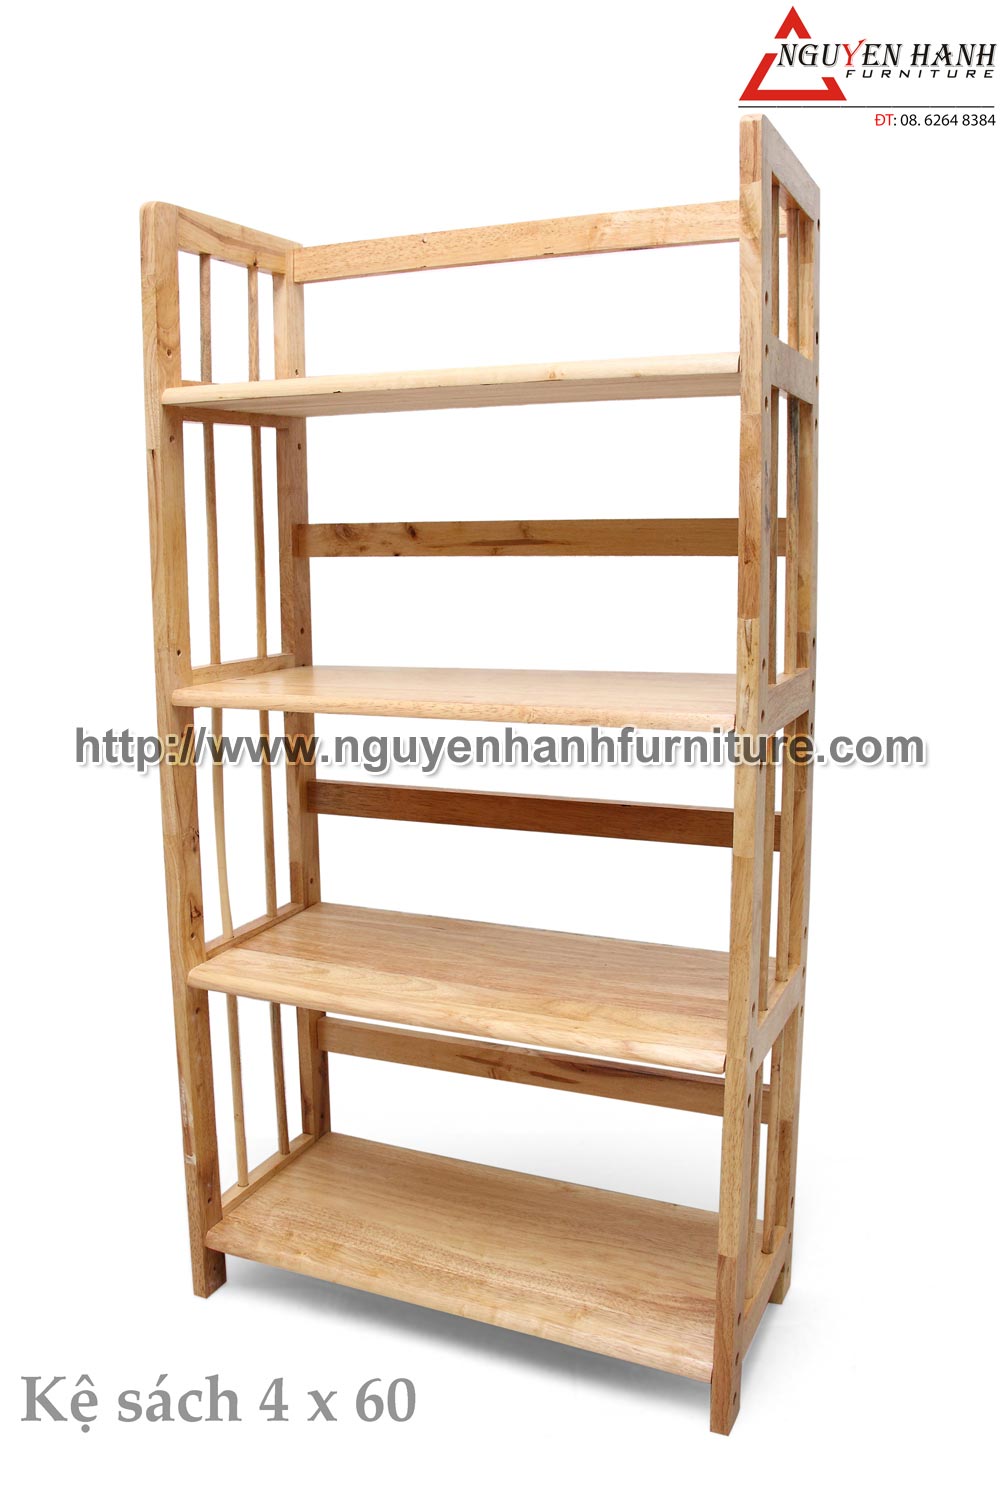 Name product: 4 storey Adjustable Bookshelf 60 (Natural) - Dimensions: 60 x 28 x 120 (H) - Description: Wood natural rubber